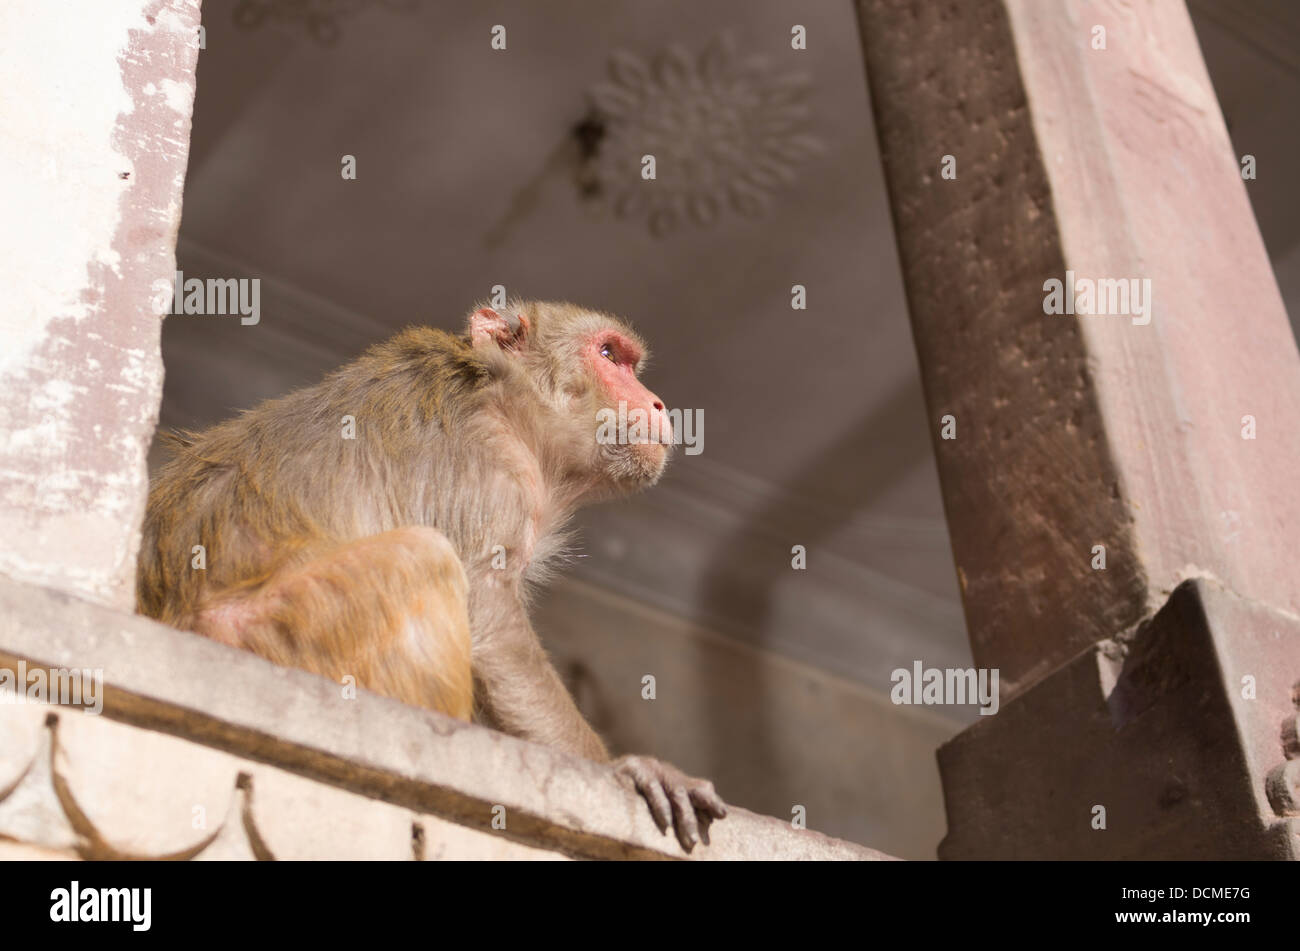 Singe singe macaque à Galta Palace / Temple - Jaipur, Rajasthan, Inde Banque D'Images